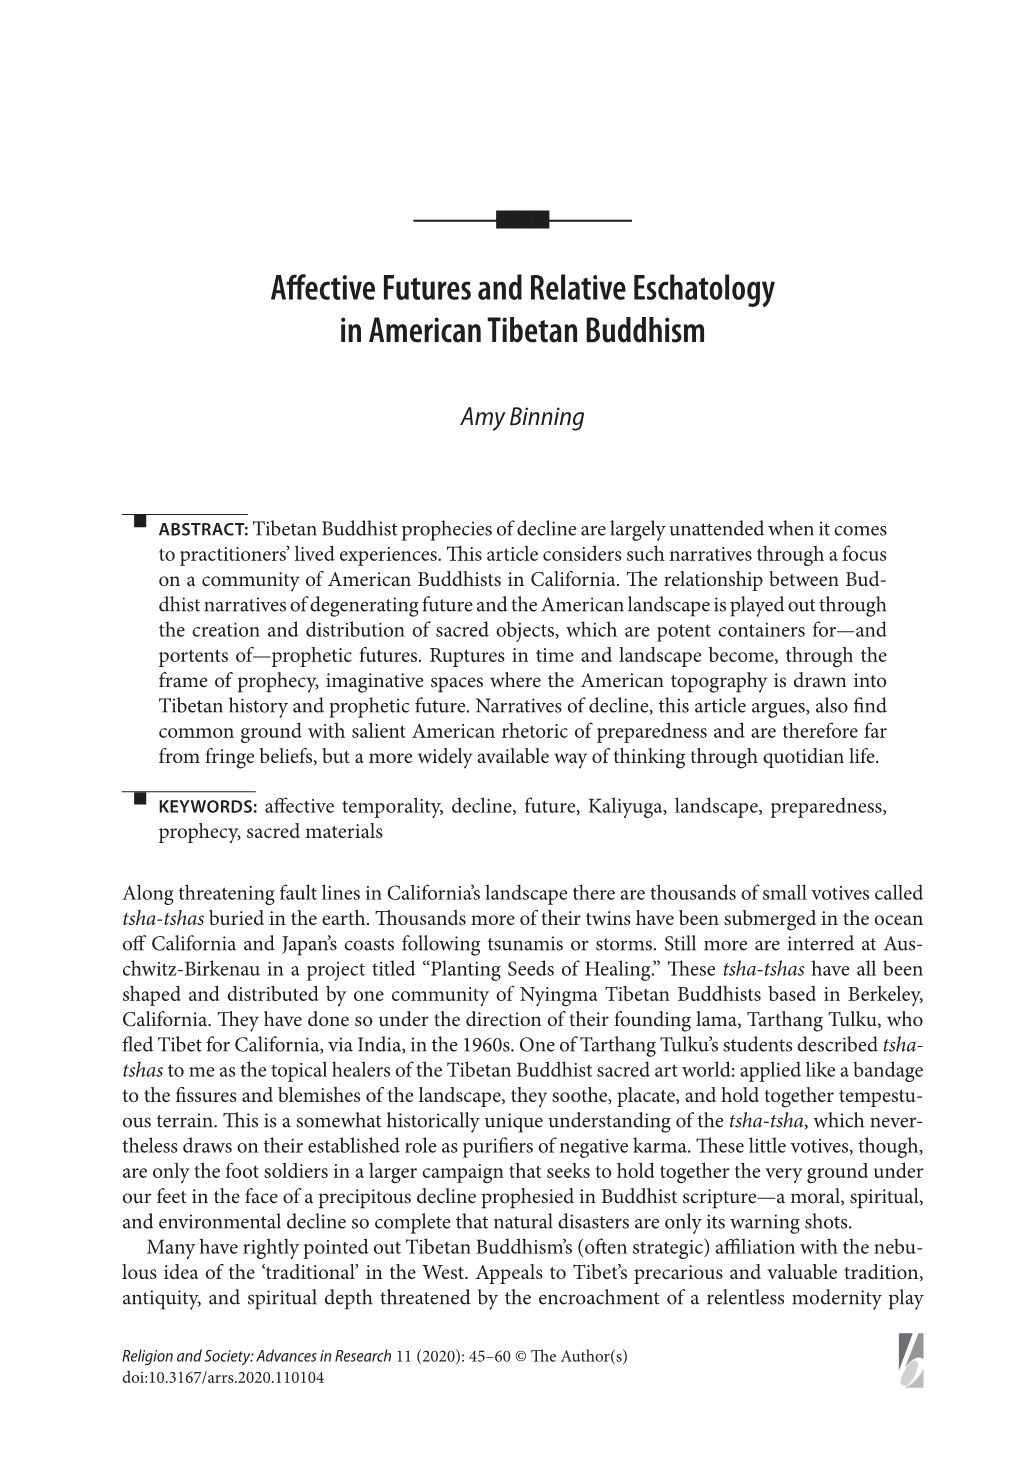 Nnn Affective Futures and Relative Eschatology in American Tibetan Buddhism